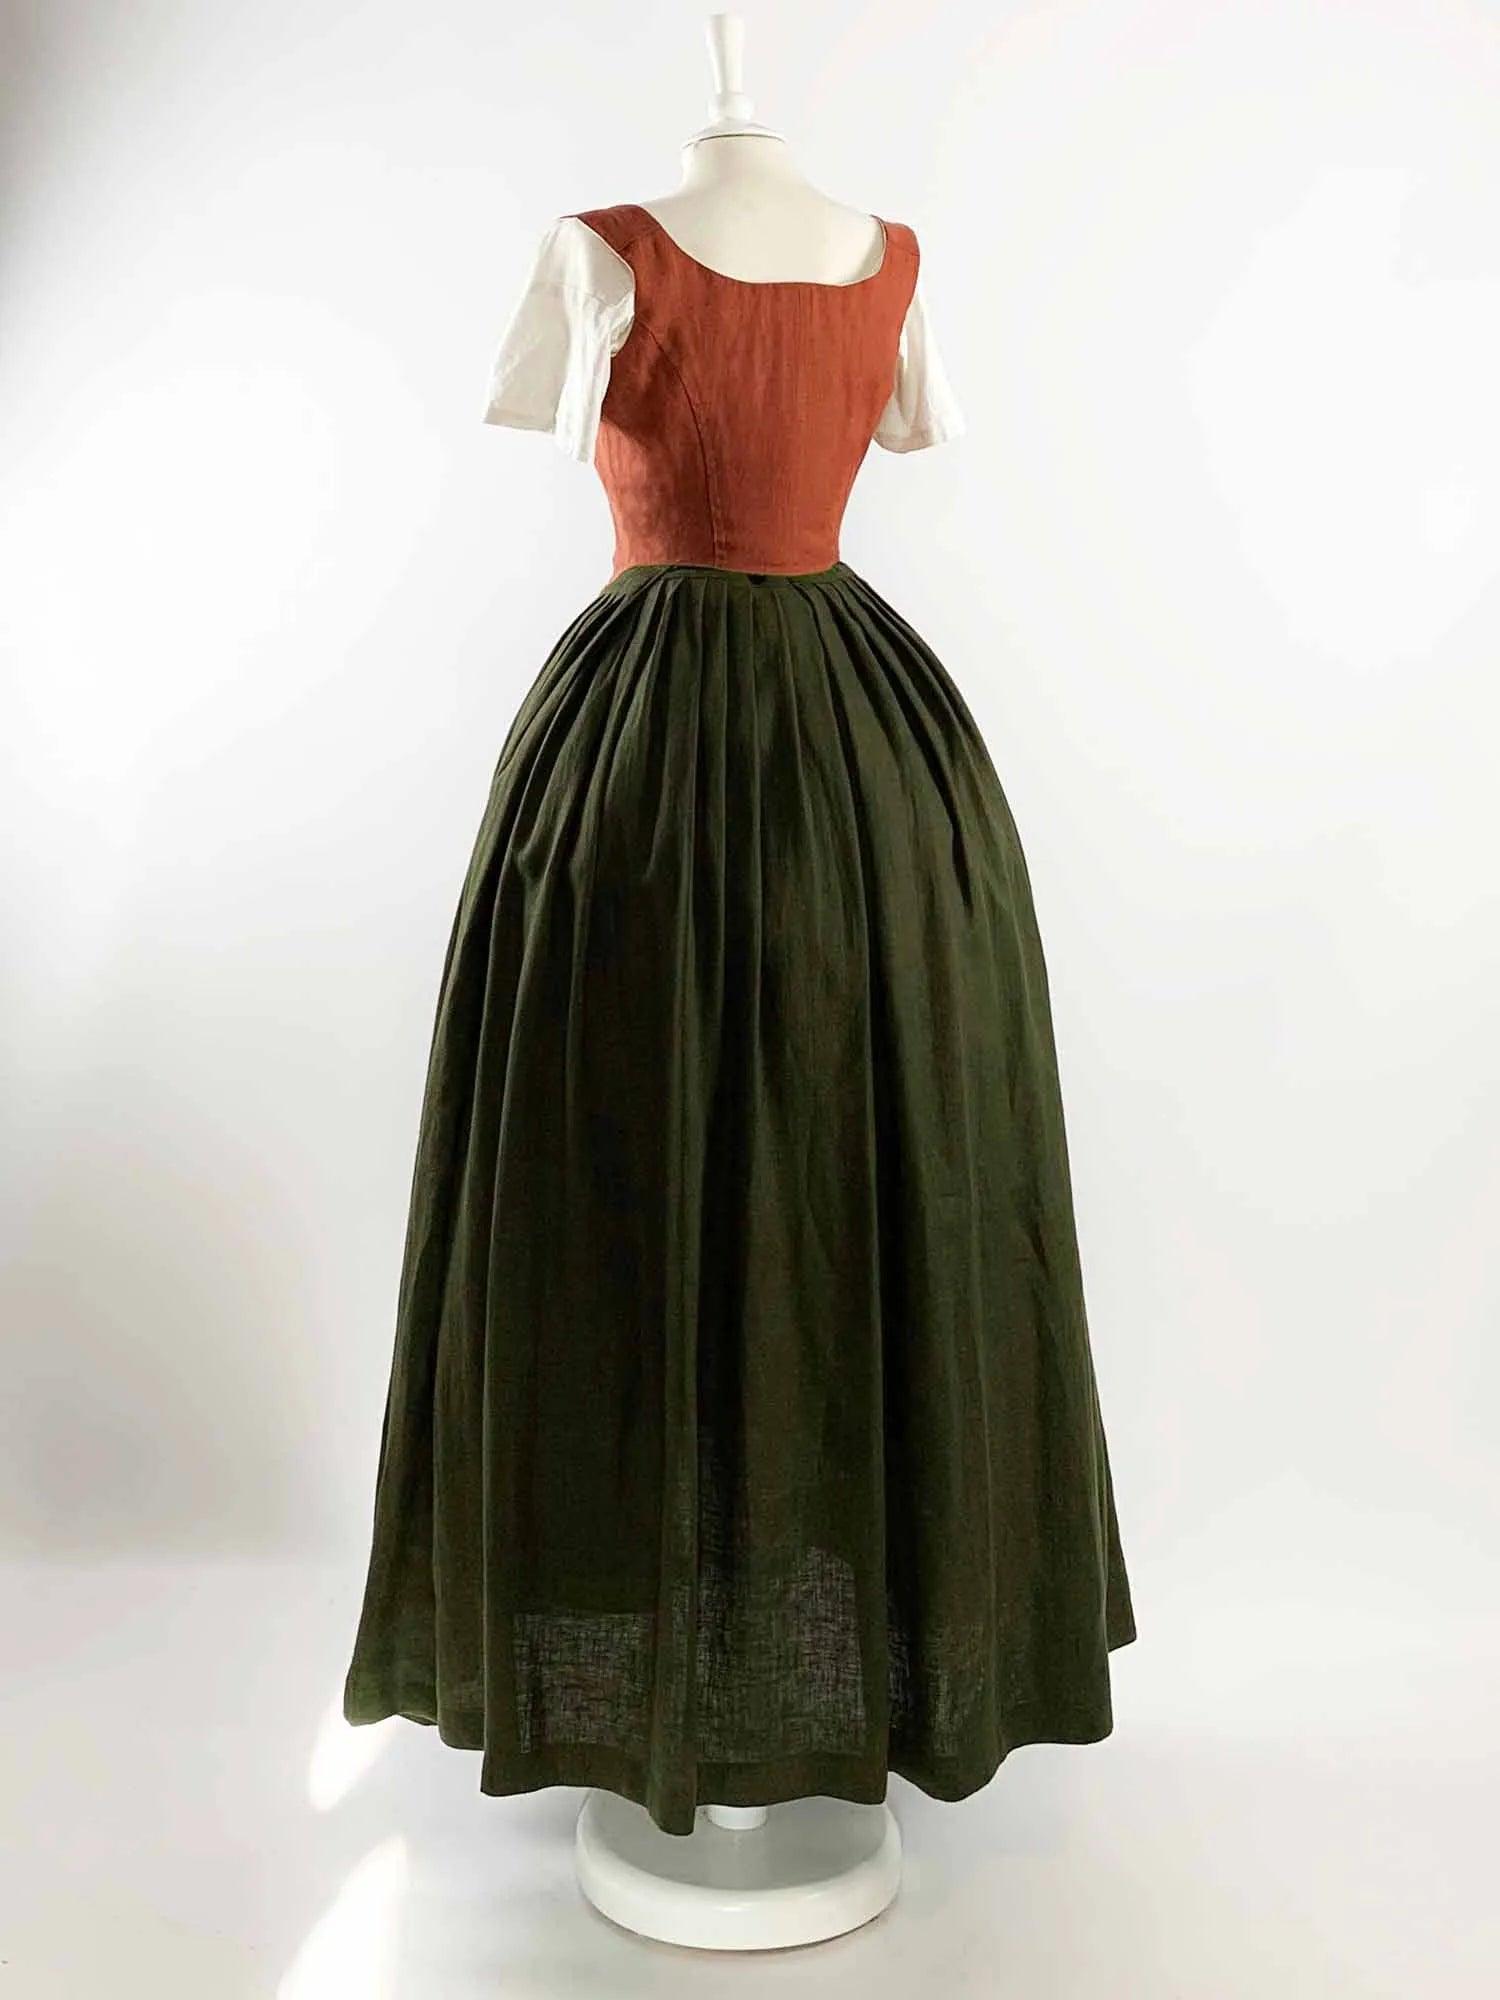 ISOLDE, Renaissance Costume in Rust Orange & Moss Green Linen - Atelier Serraspina